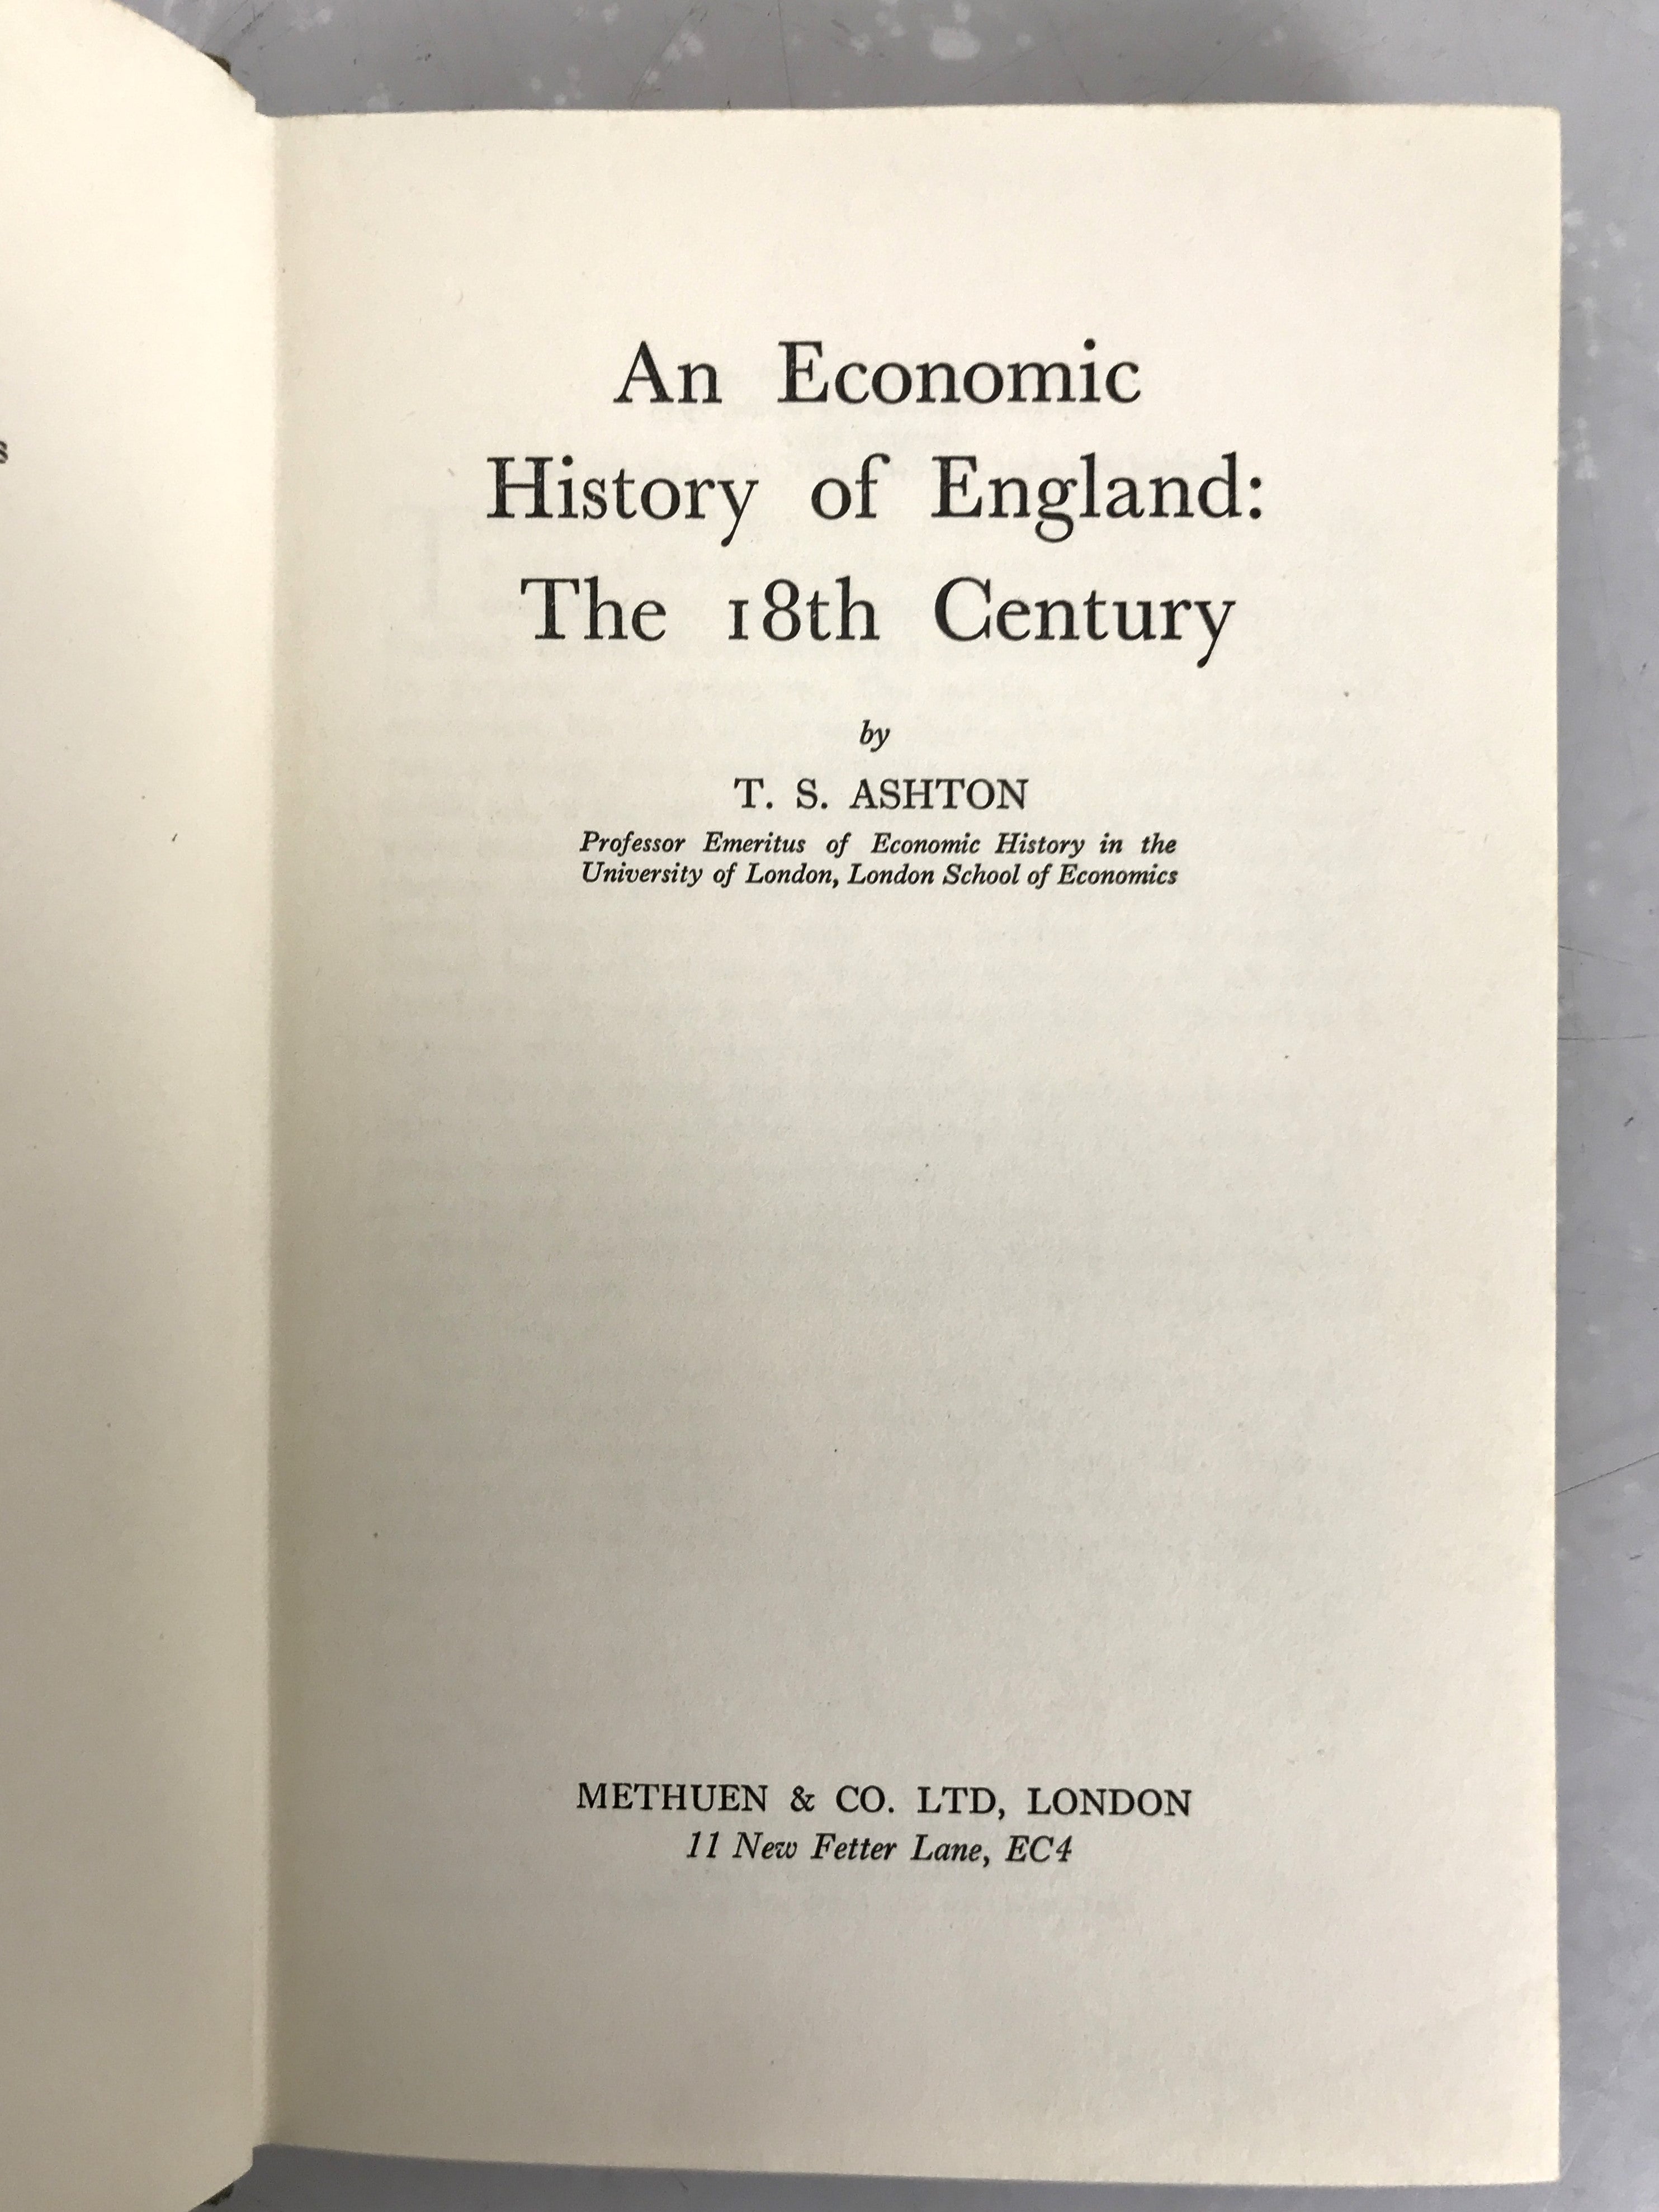 An Economic History of England The 18th Century by T.S. Ashton 1966 HC DJ